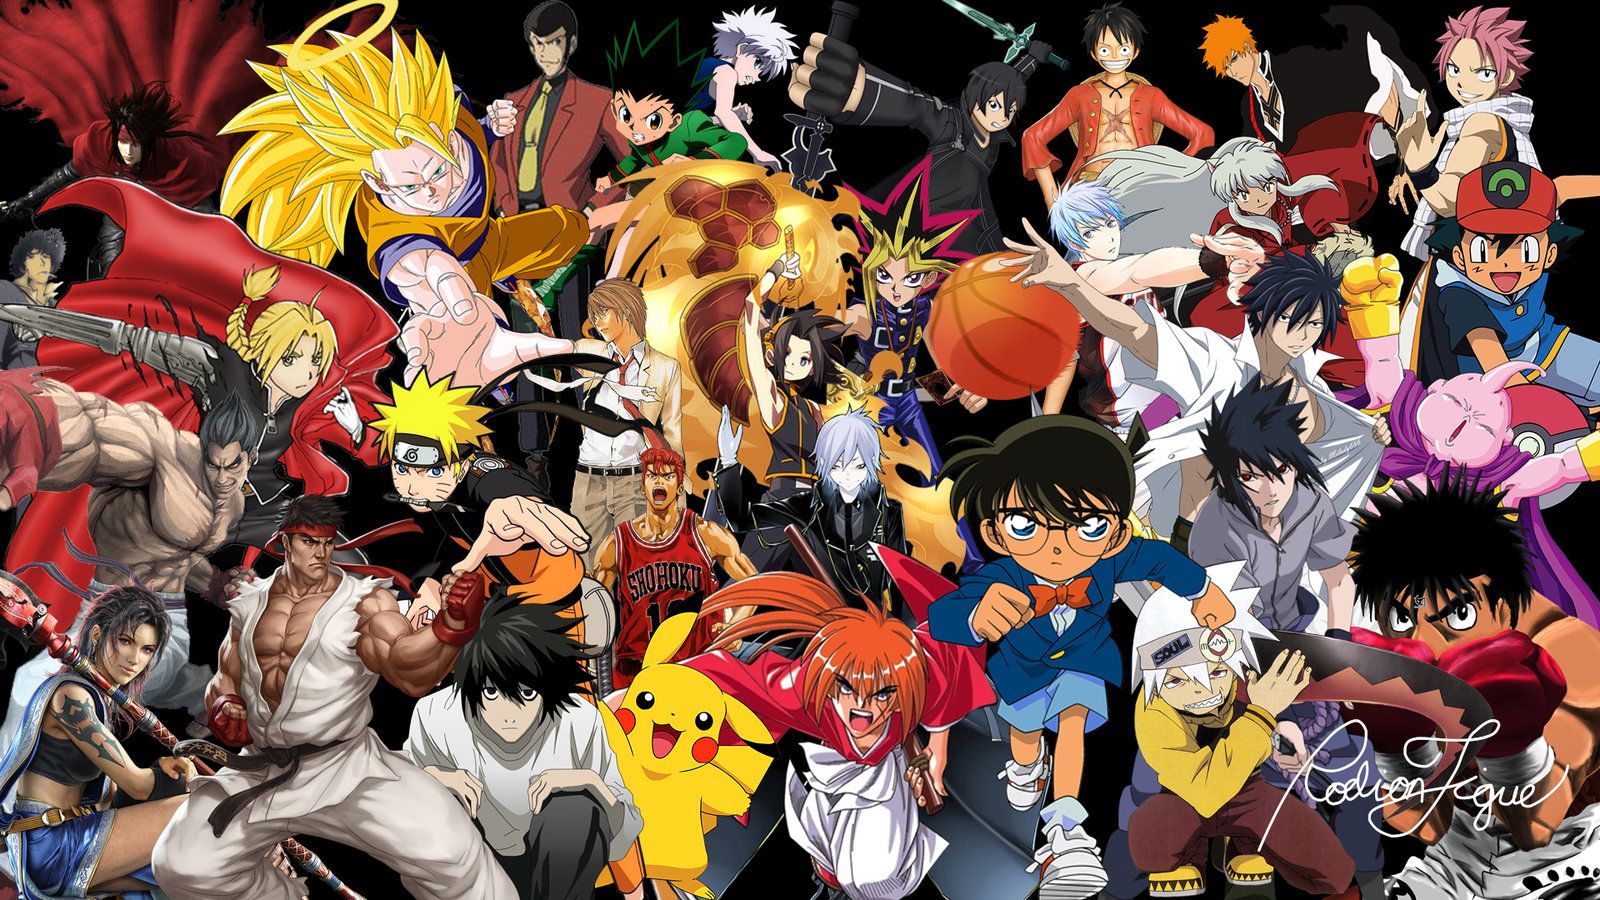 fond d'écran collage anime,anime,dessin animé,collage,dessin animé,ouvrages d'art